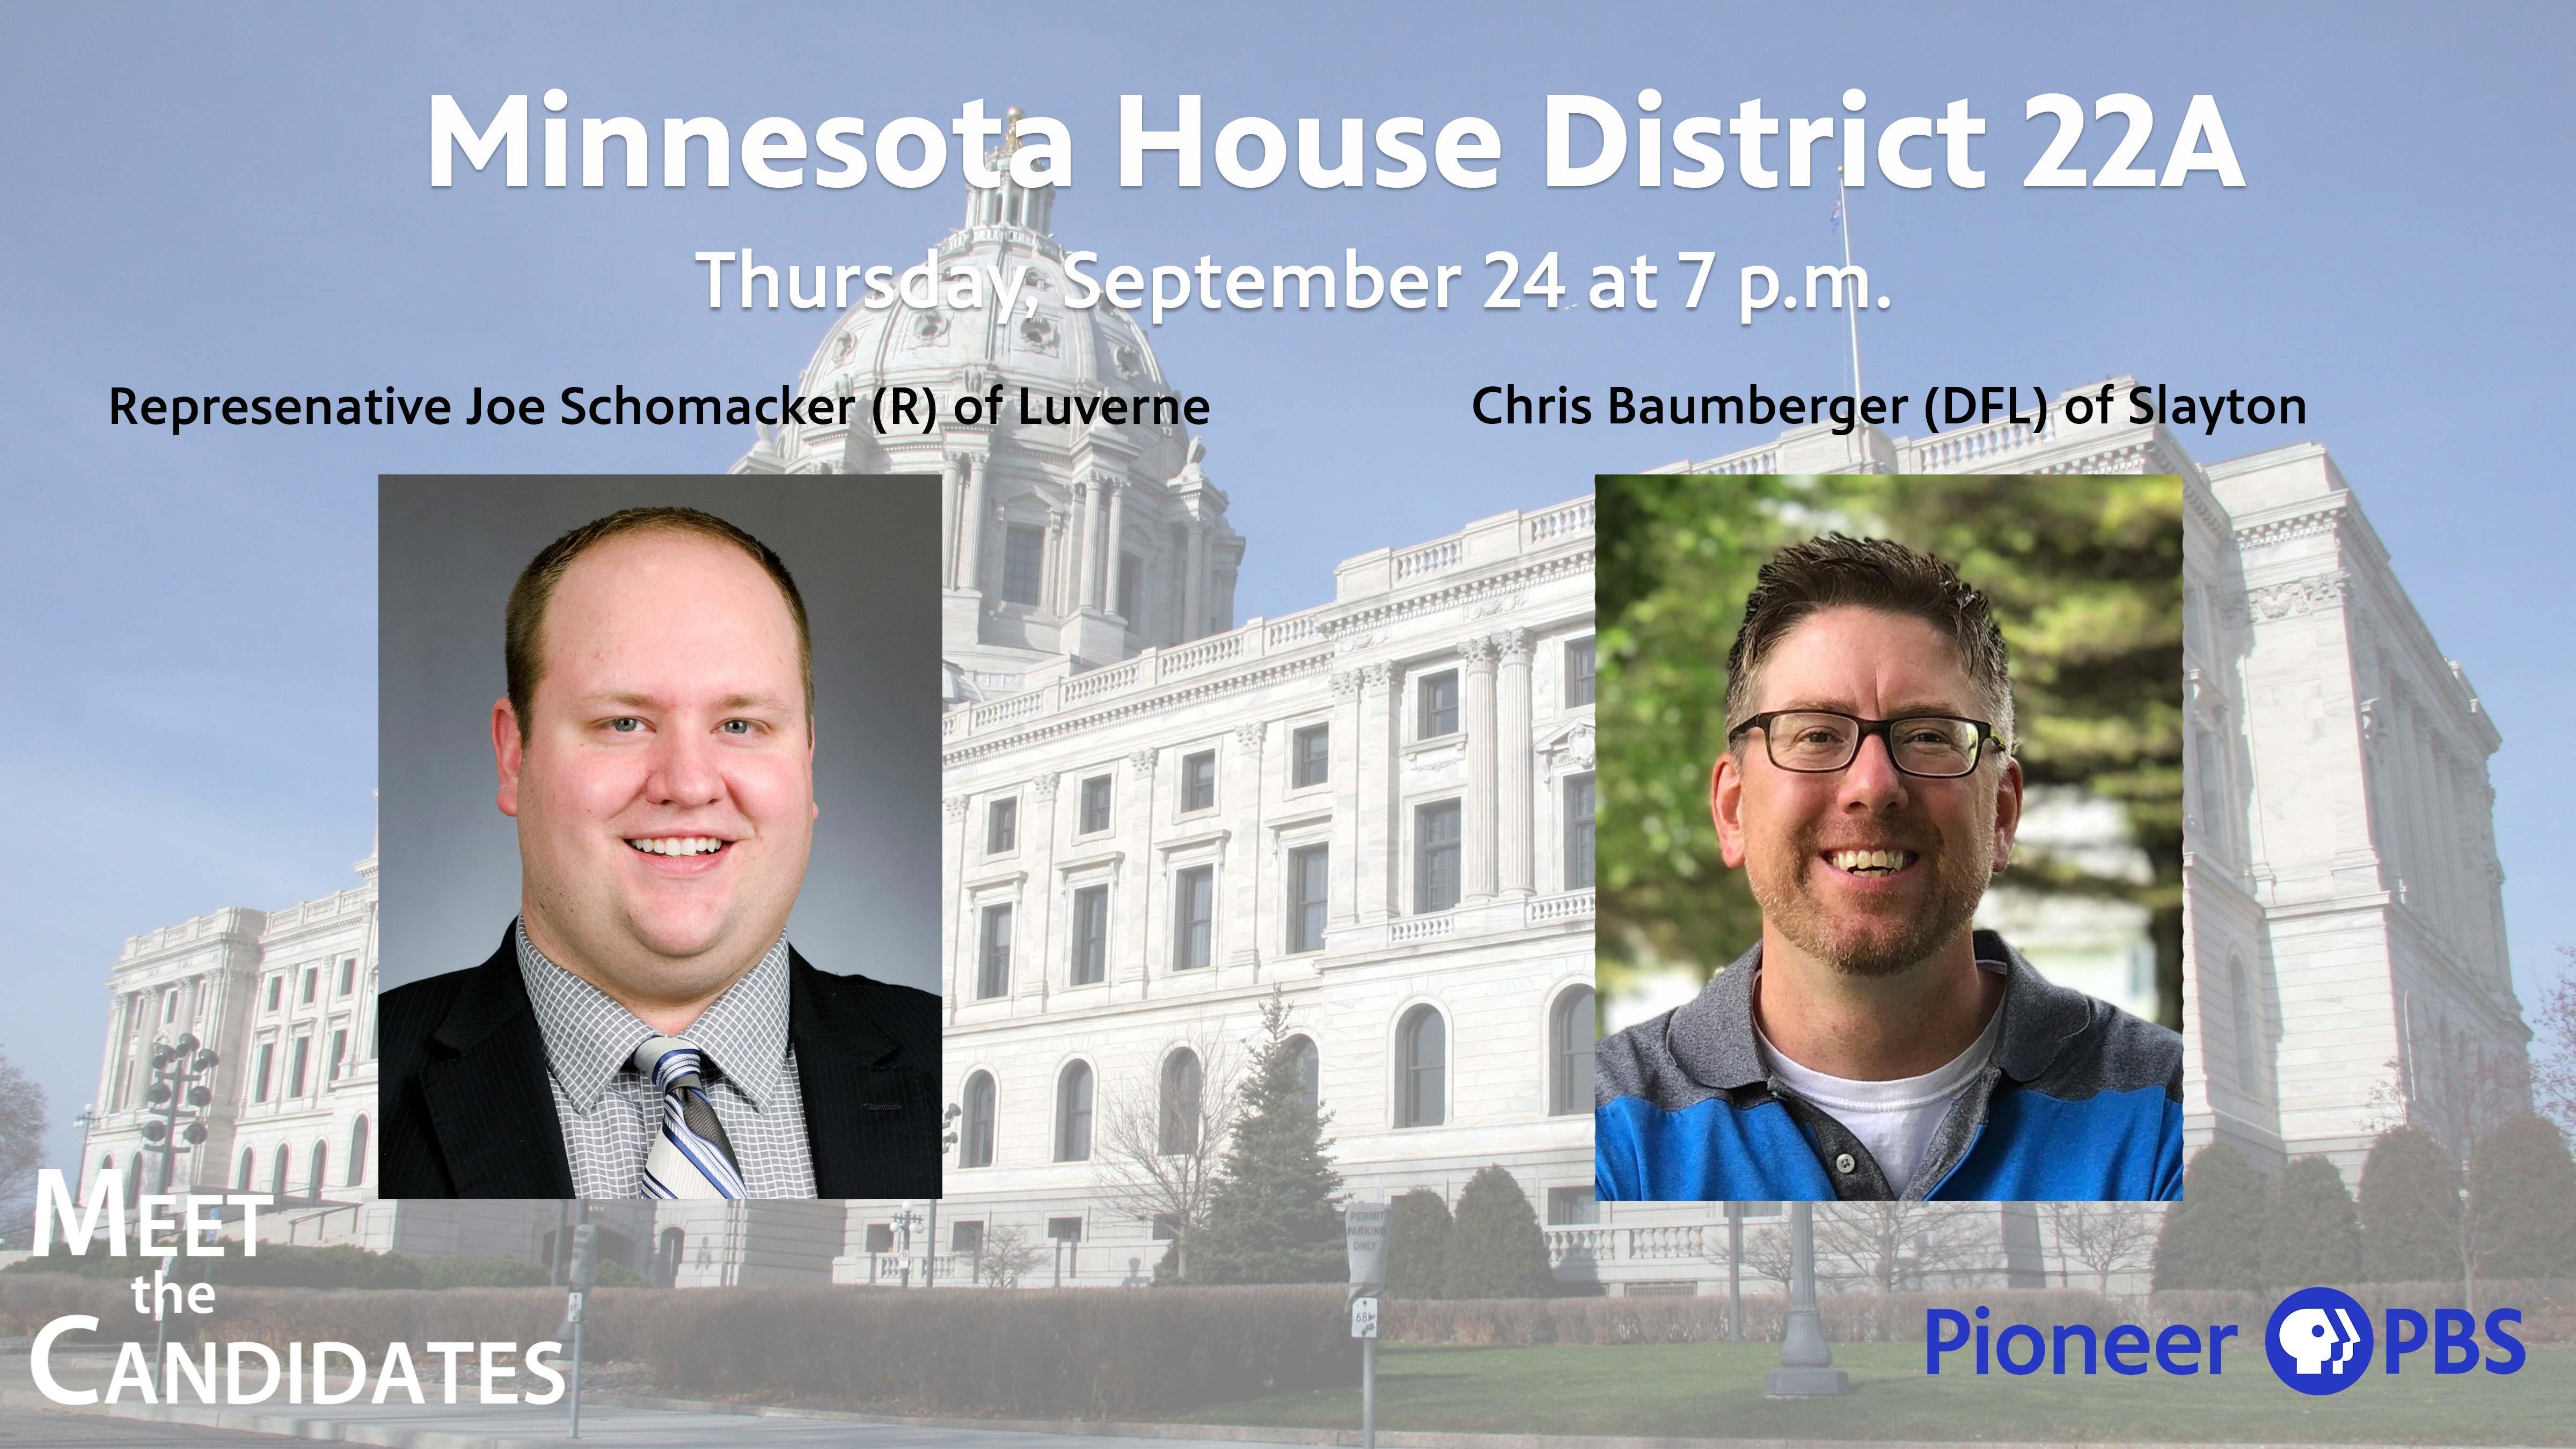  Minnesota House District 22A Representative Joe Schomacker (R) of Luverne and challenger Chris Baumberger (DFL) of Slayton.